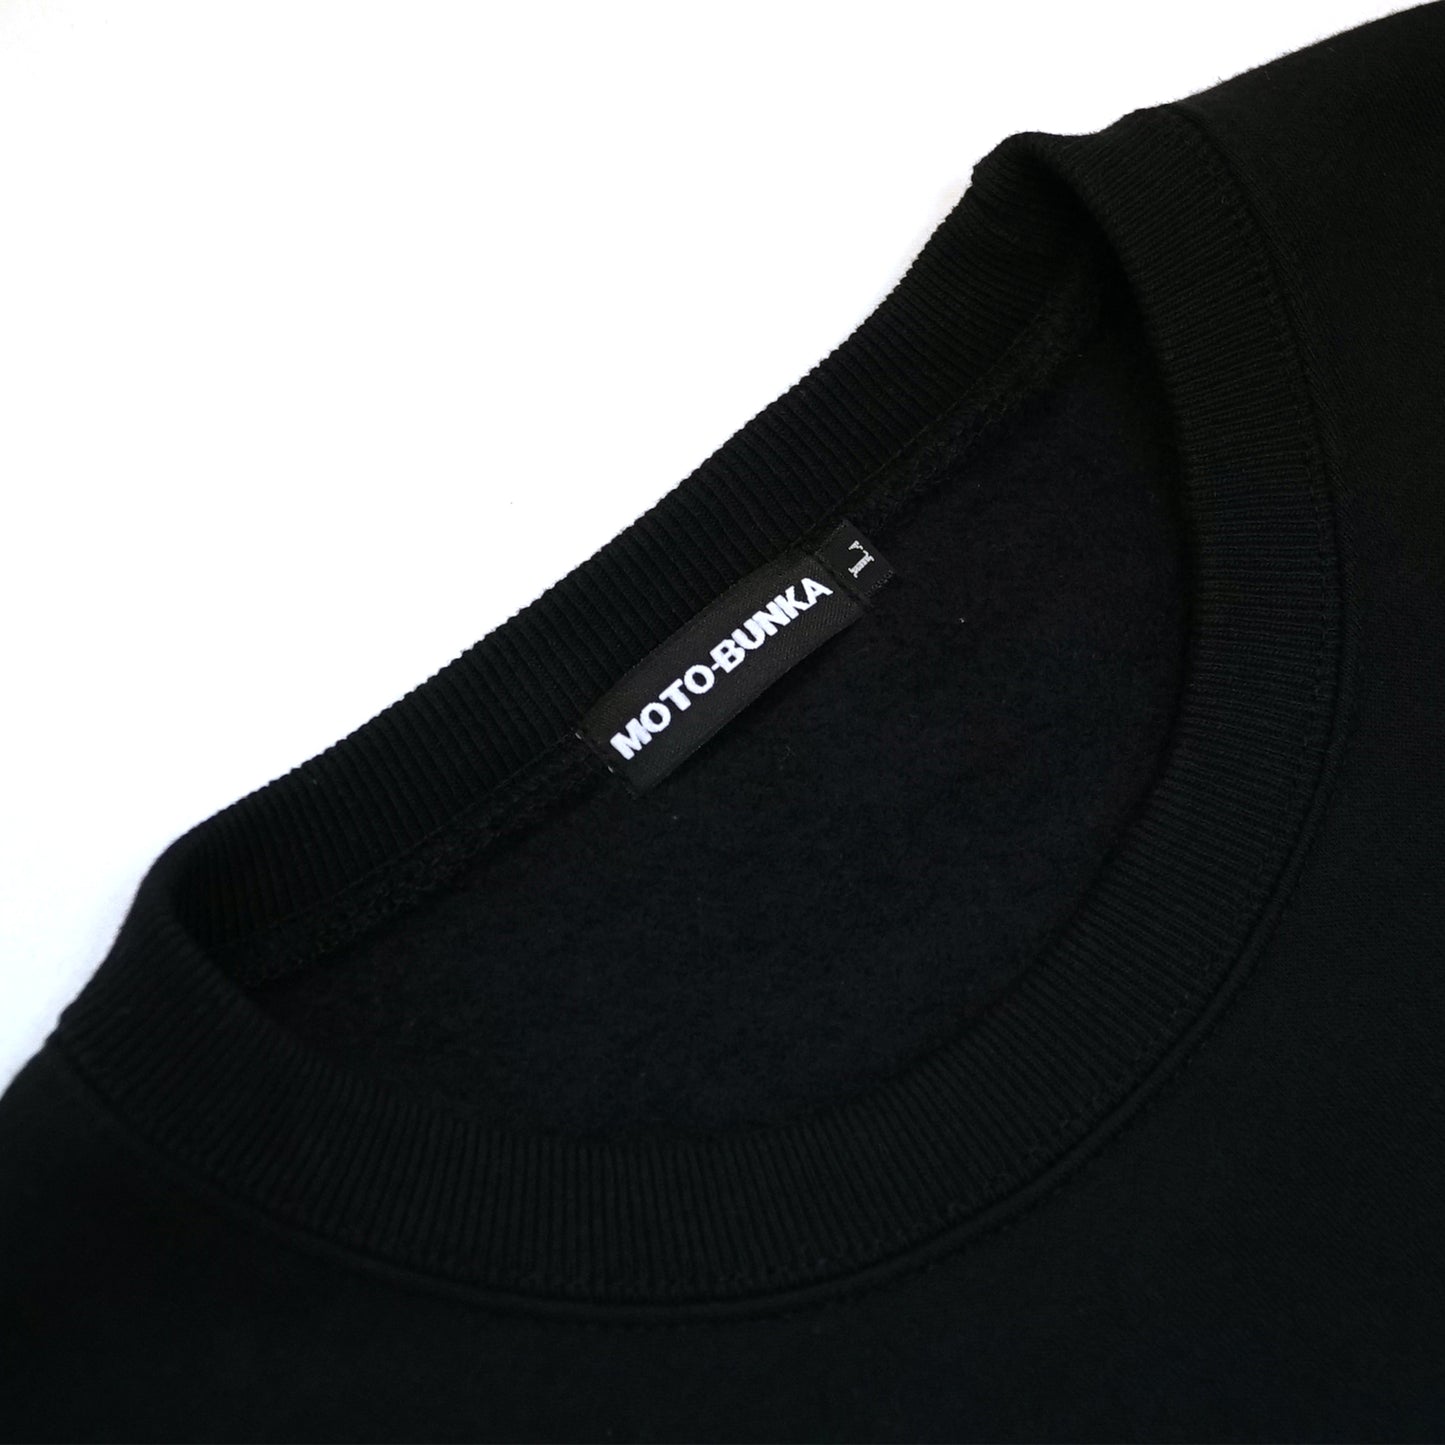 MOTO-BUNKA - RGB Glitch Sweatshirt/Black